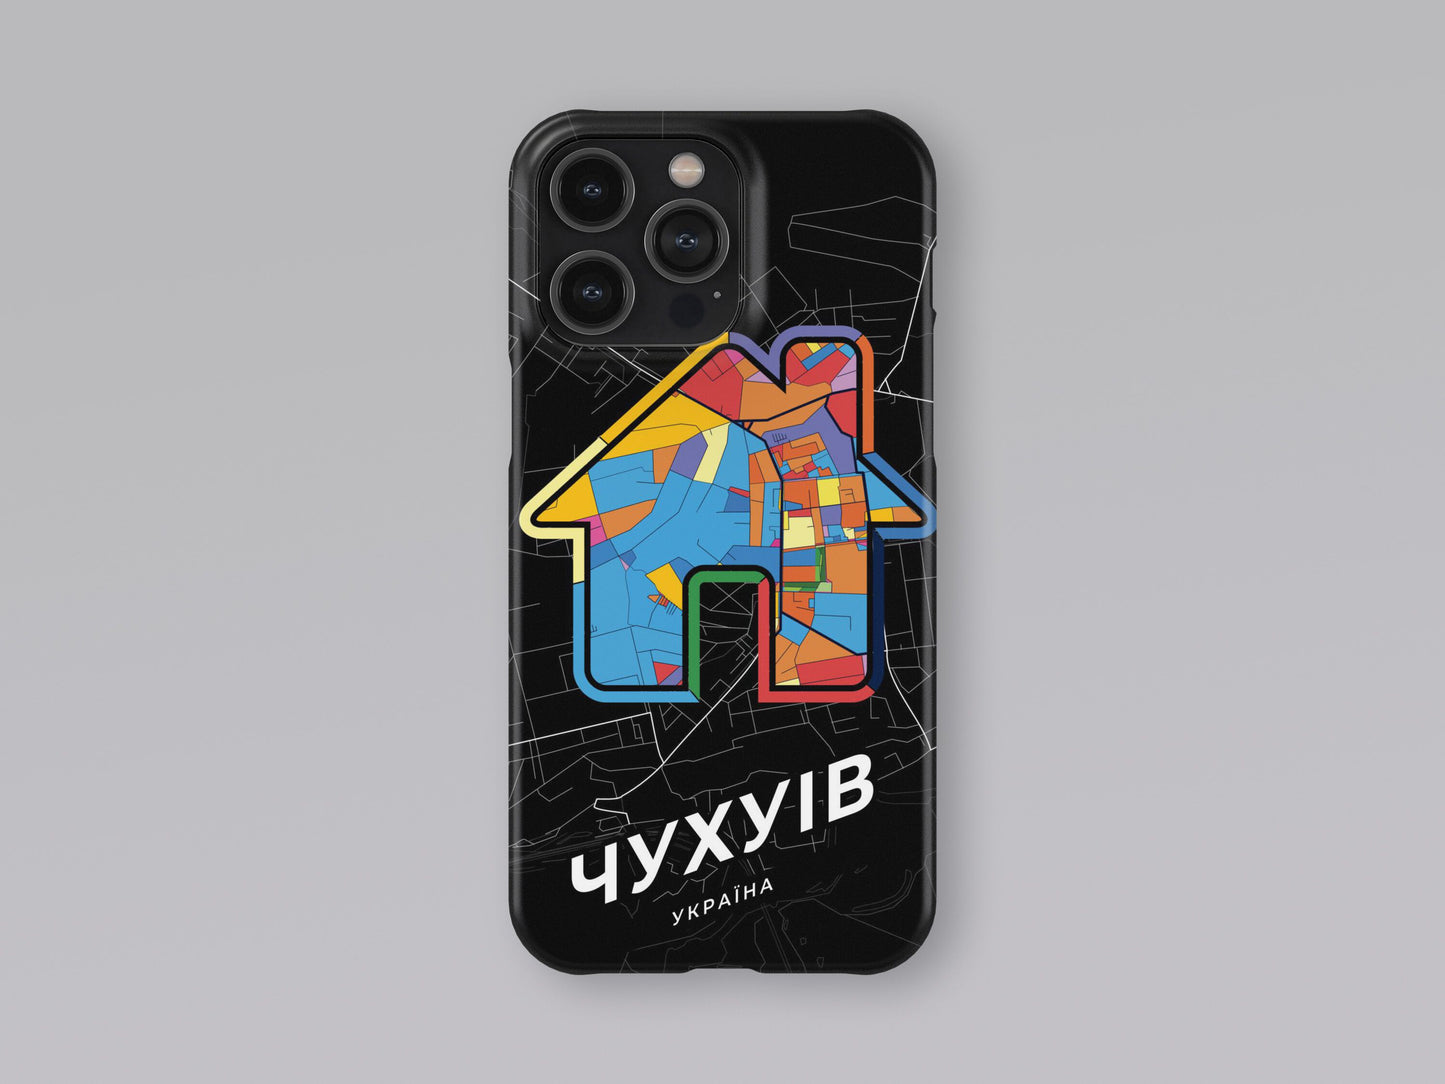 Chuhuiv Ukraine slim phone case with colorful icon. Birthday, wedding or housewarming gift. Couple match cases. 3